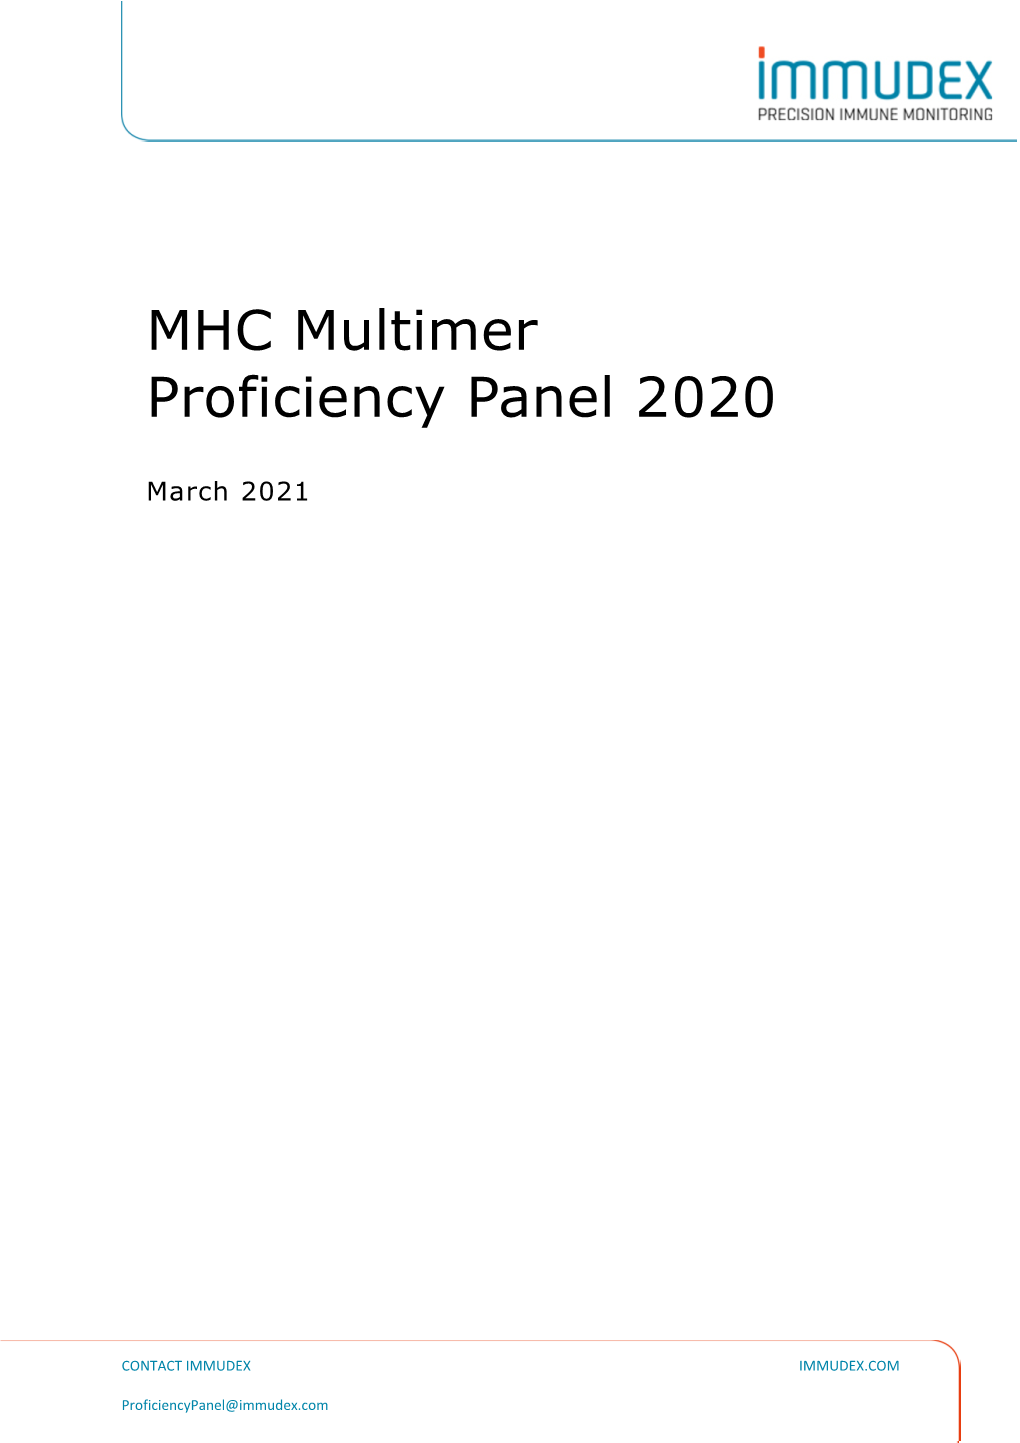 MHC Multimer Proficiency Panel 2020